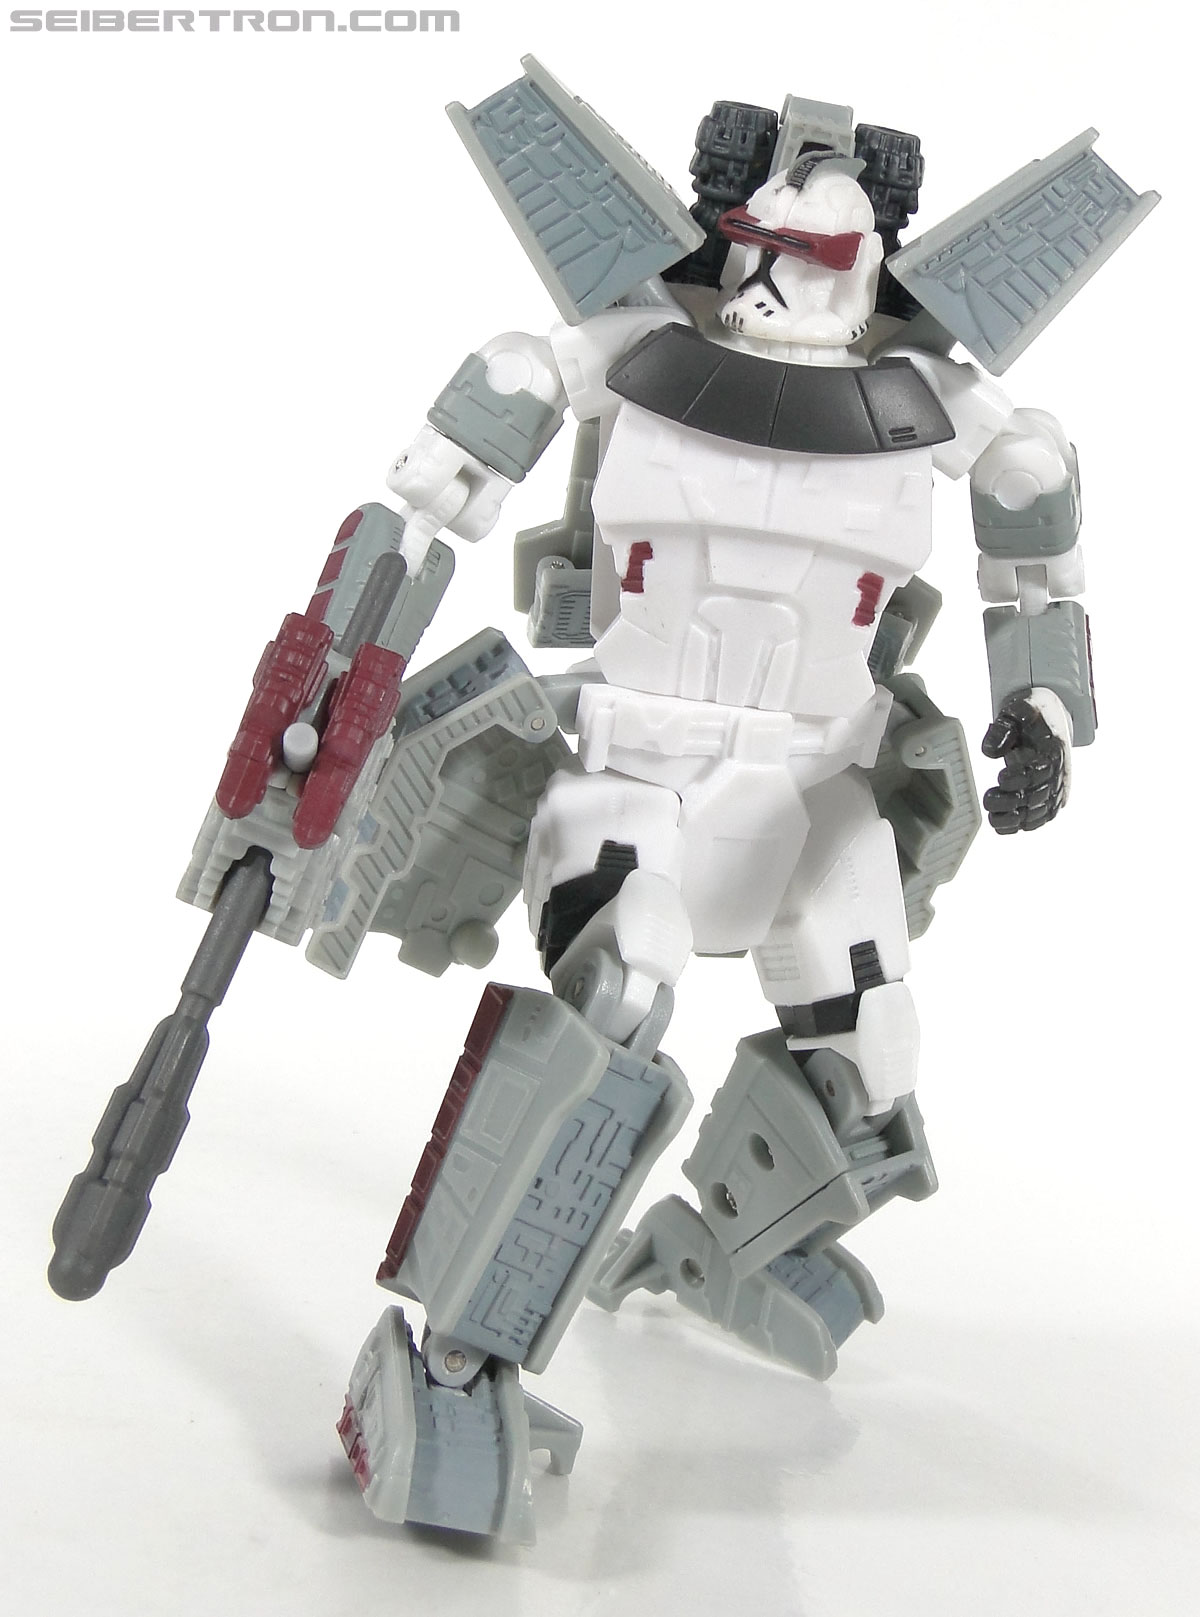 Star Wars Transformers Lieutenant Thire (Republic Attack Cruiser) (Image #72 of 76)